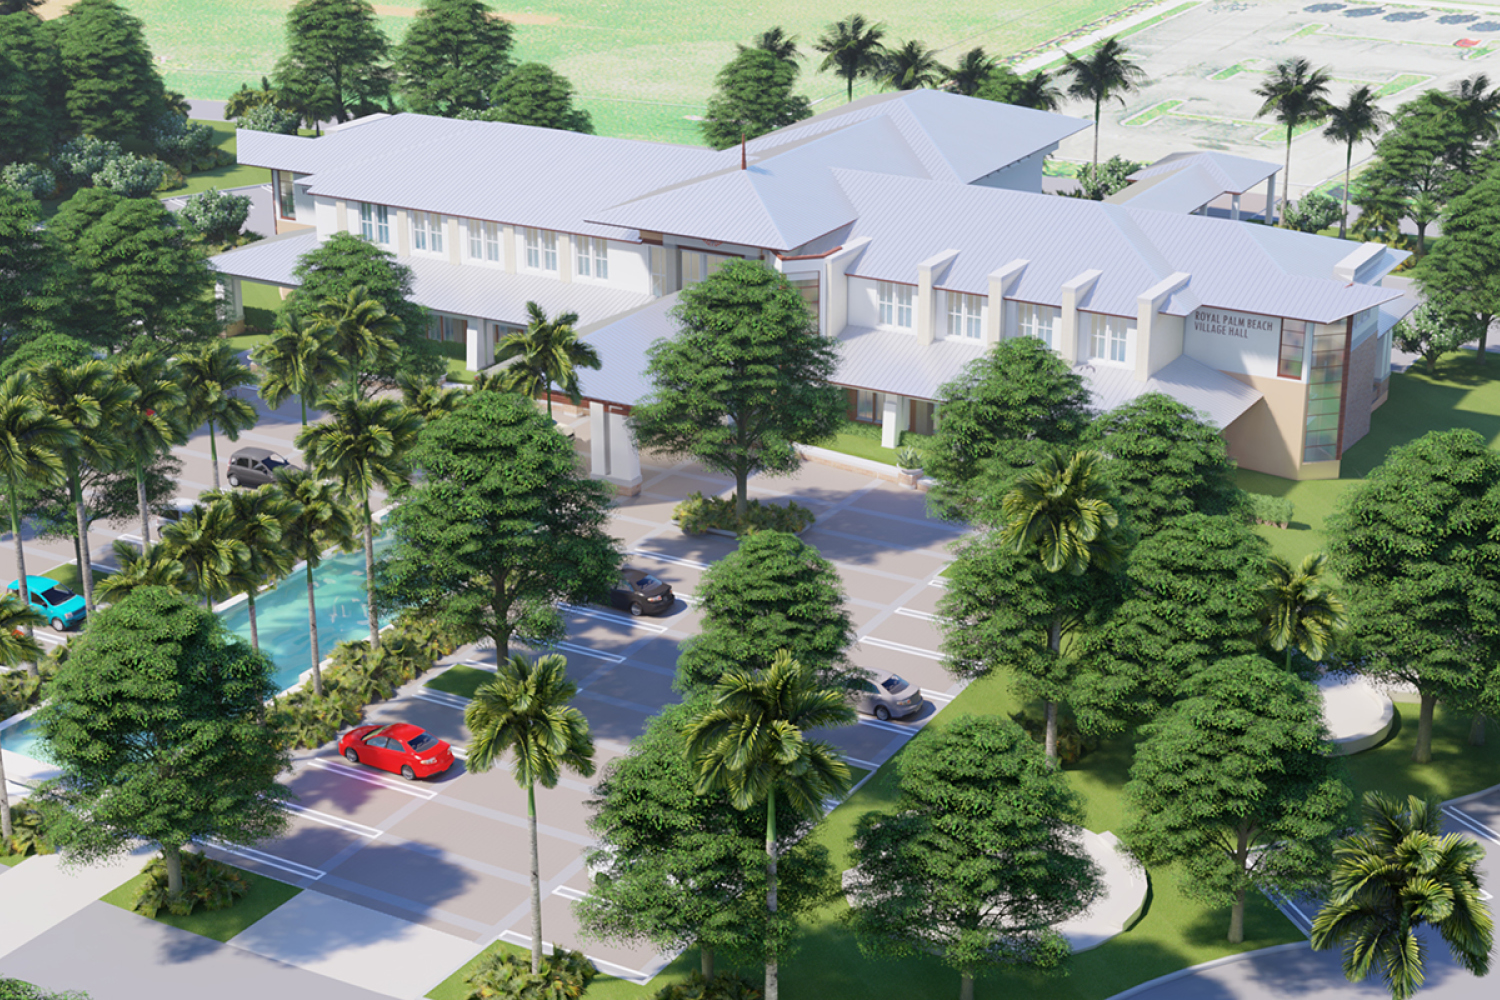 Village Hall of Royal Palm Beach Rendering - NEWS